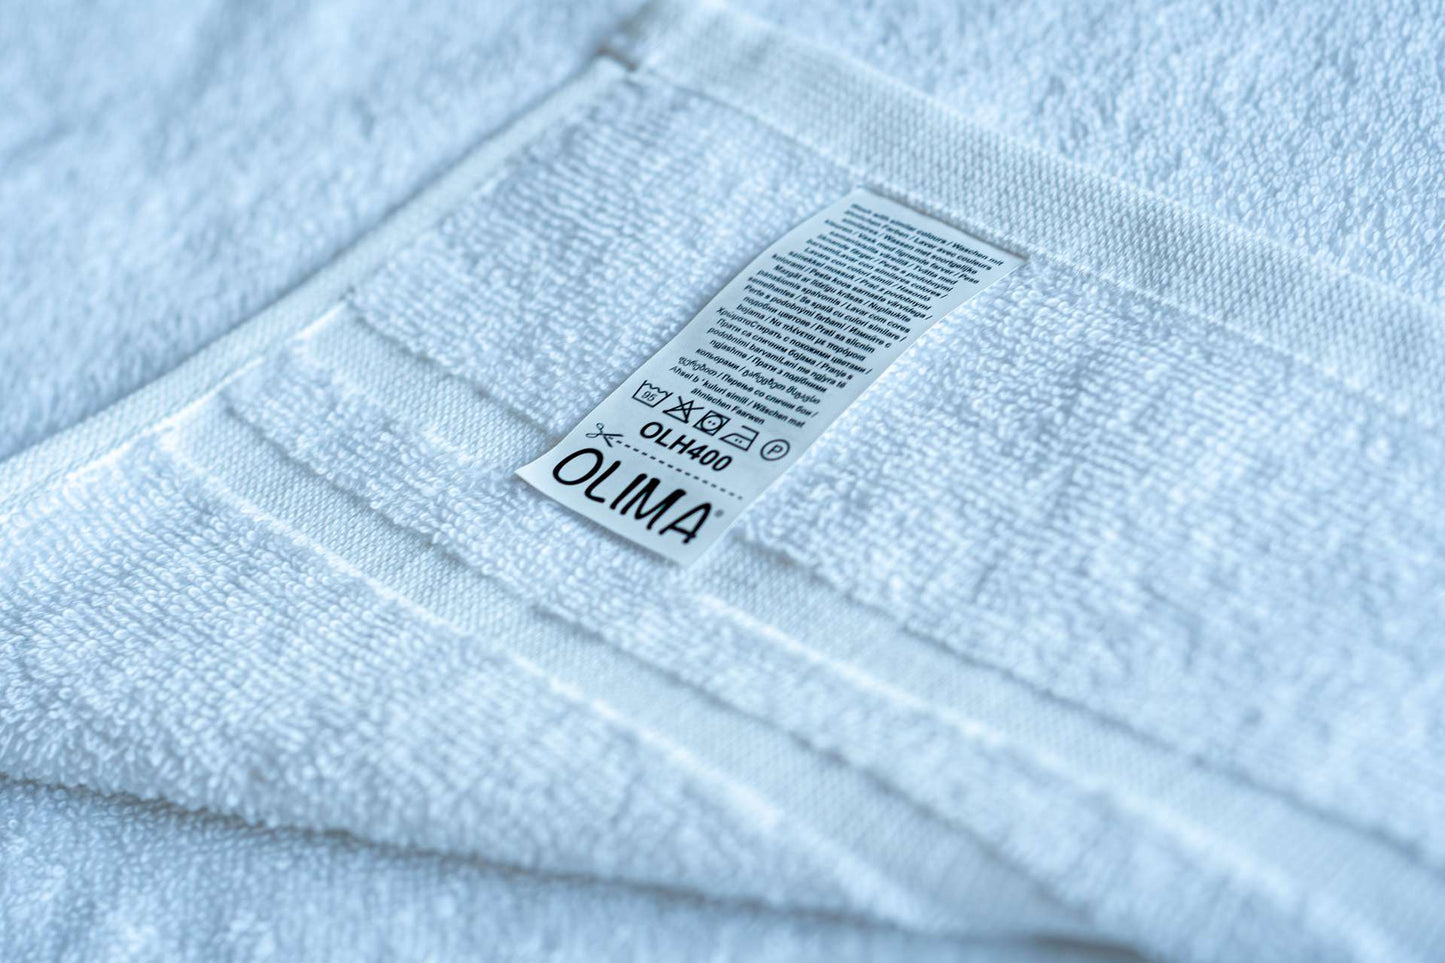 OLIMA CLASSIC HOTEL TOWELS